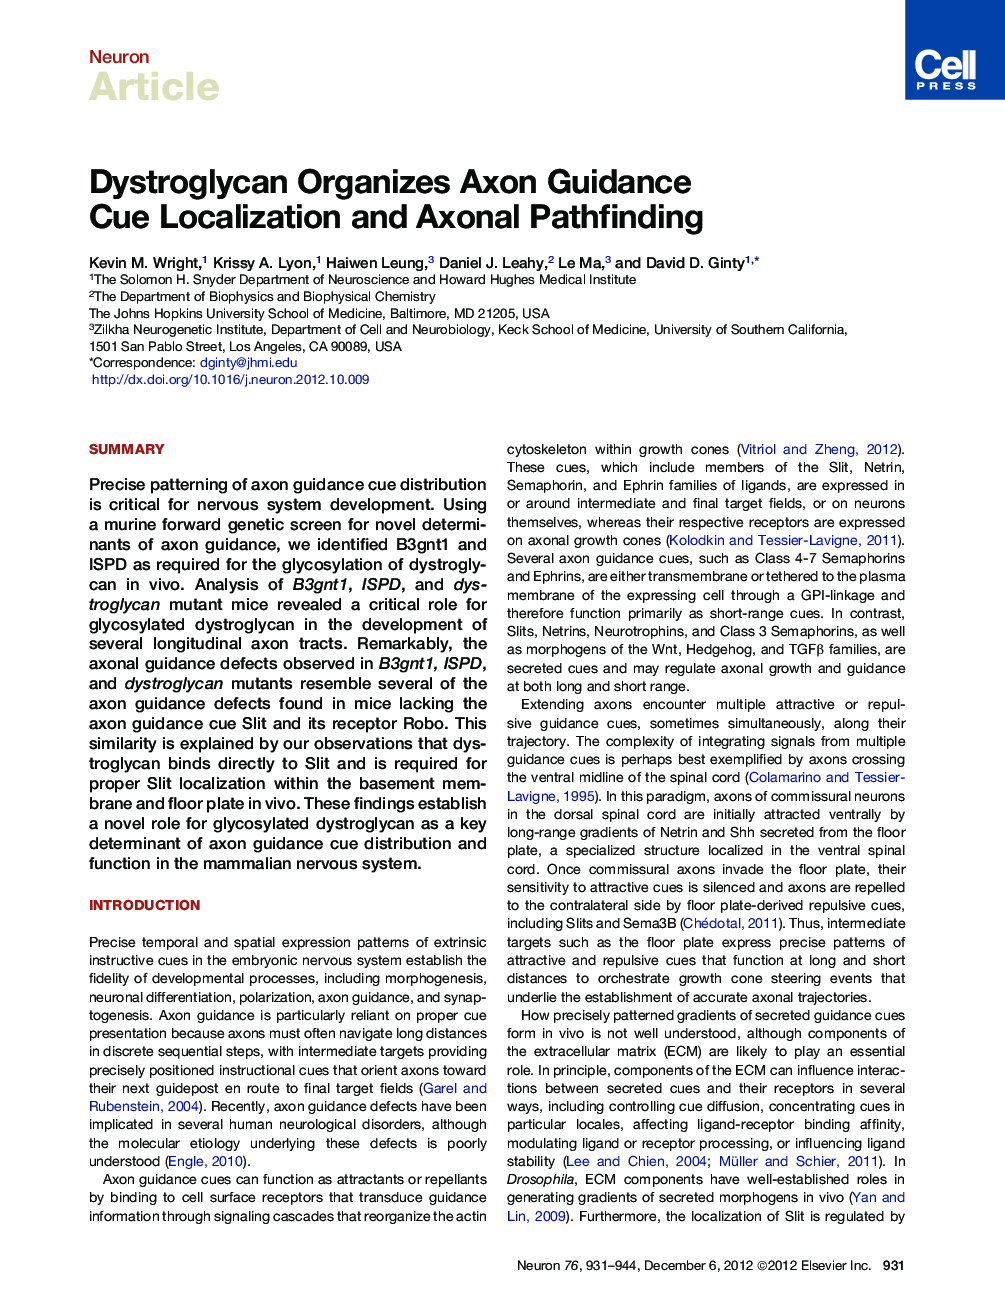 Dystroglycan Organizes Axon Guidance Cue Localization and Axonal Pathfinding